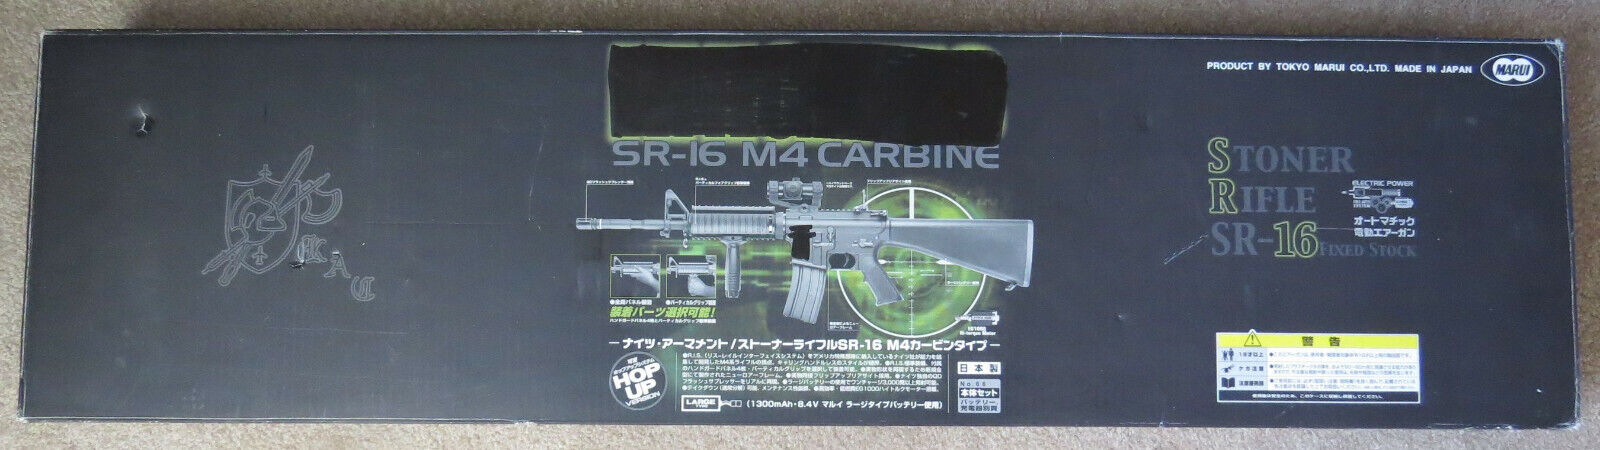 Tokyo Marui Sr-16 M4 Carbine Aeg Airsoft Rifle Electric